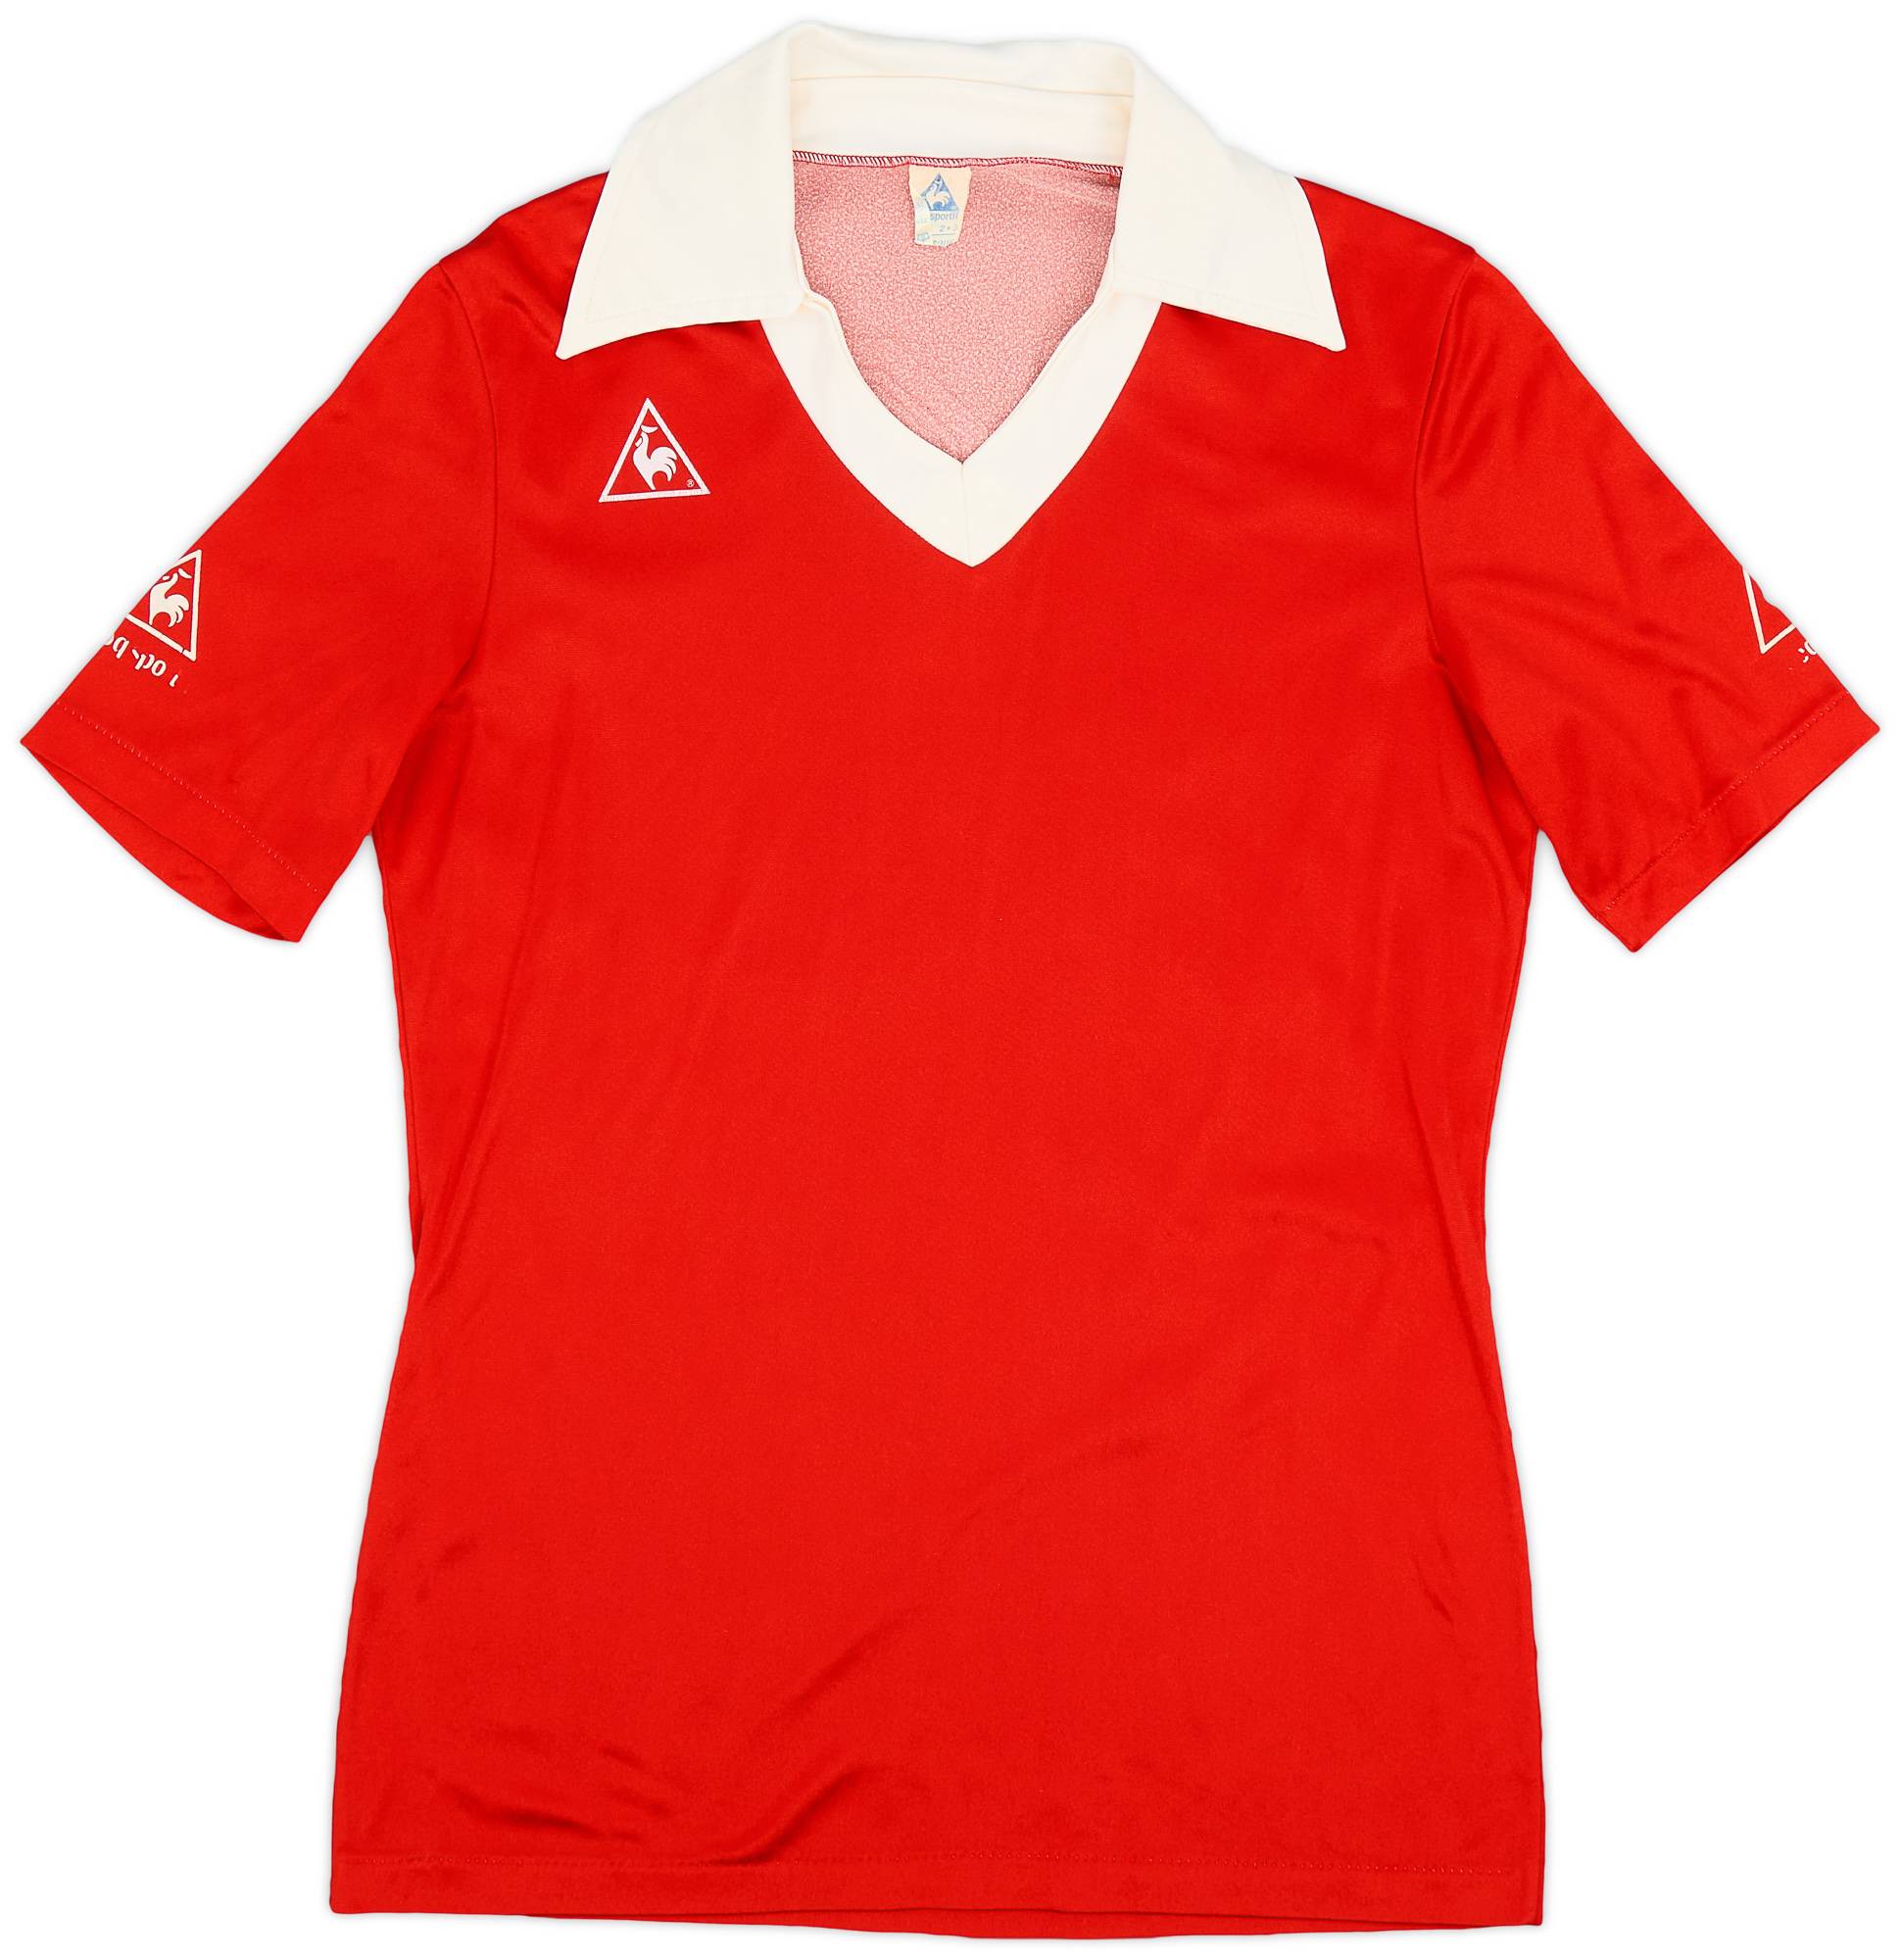 1980s Le Coq Sportif Template Shirt #16 - 7/10 - (S)